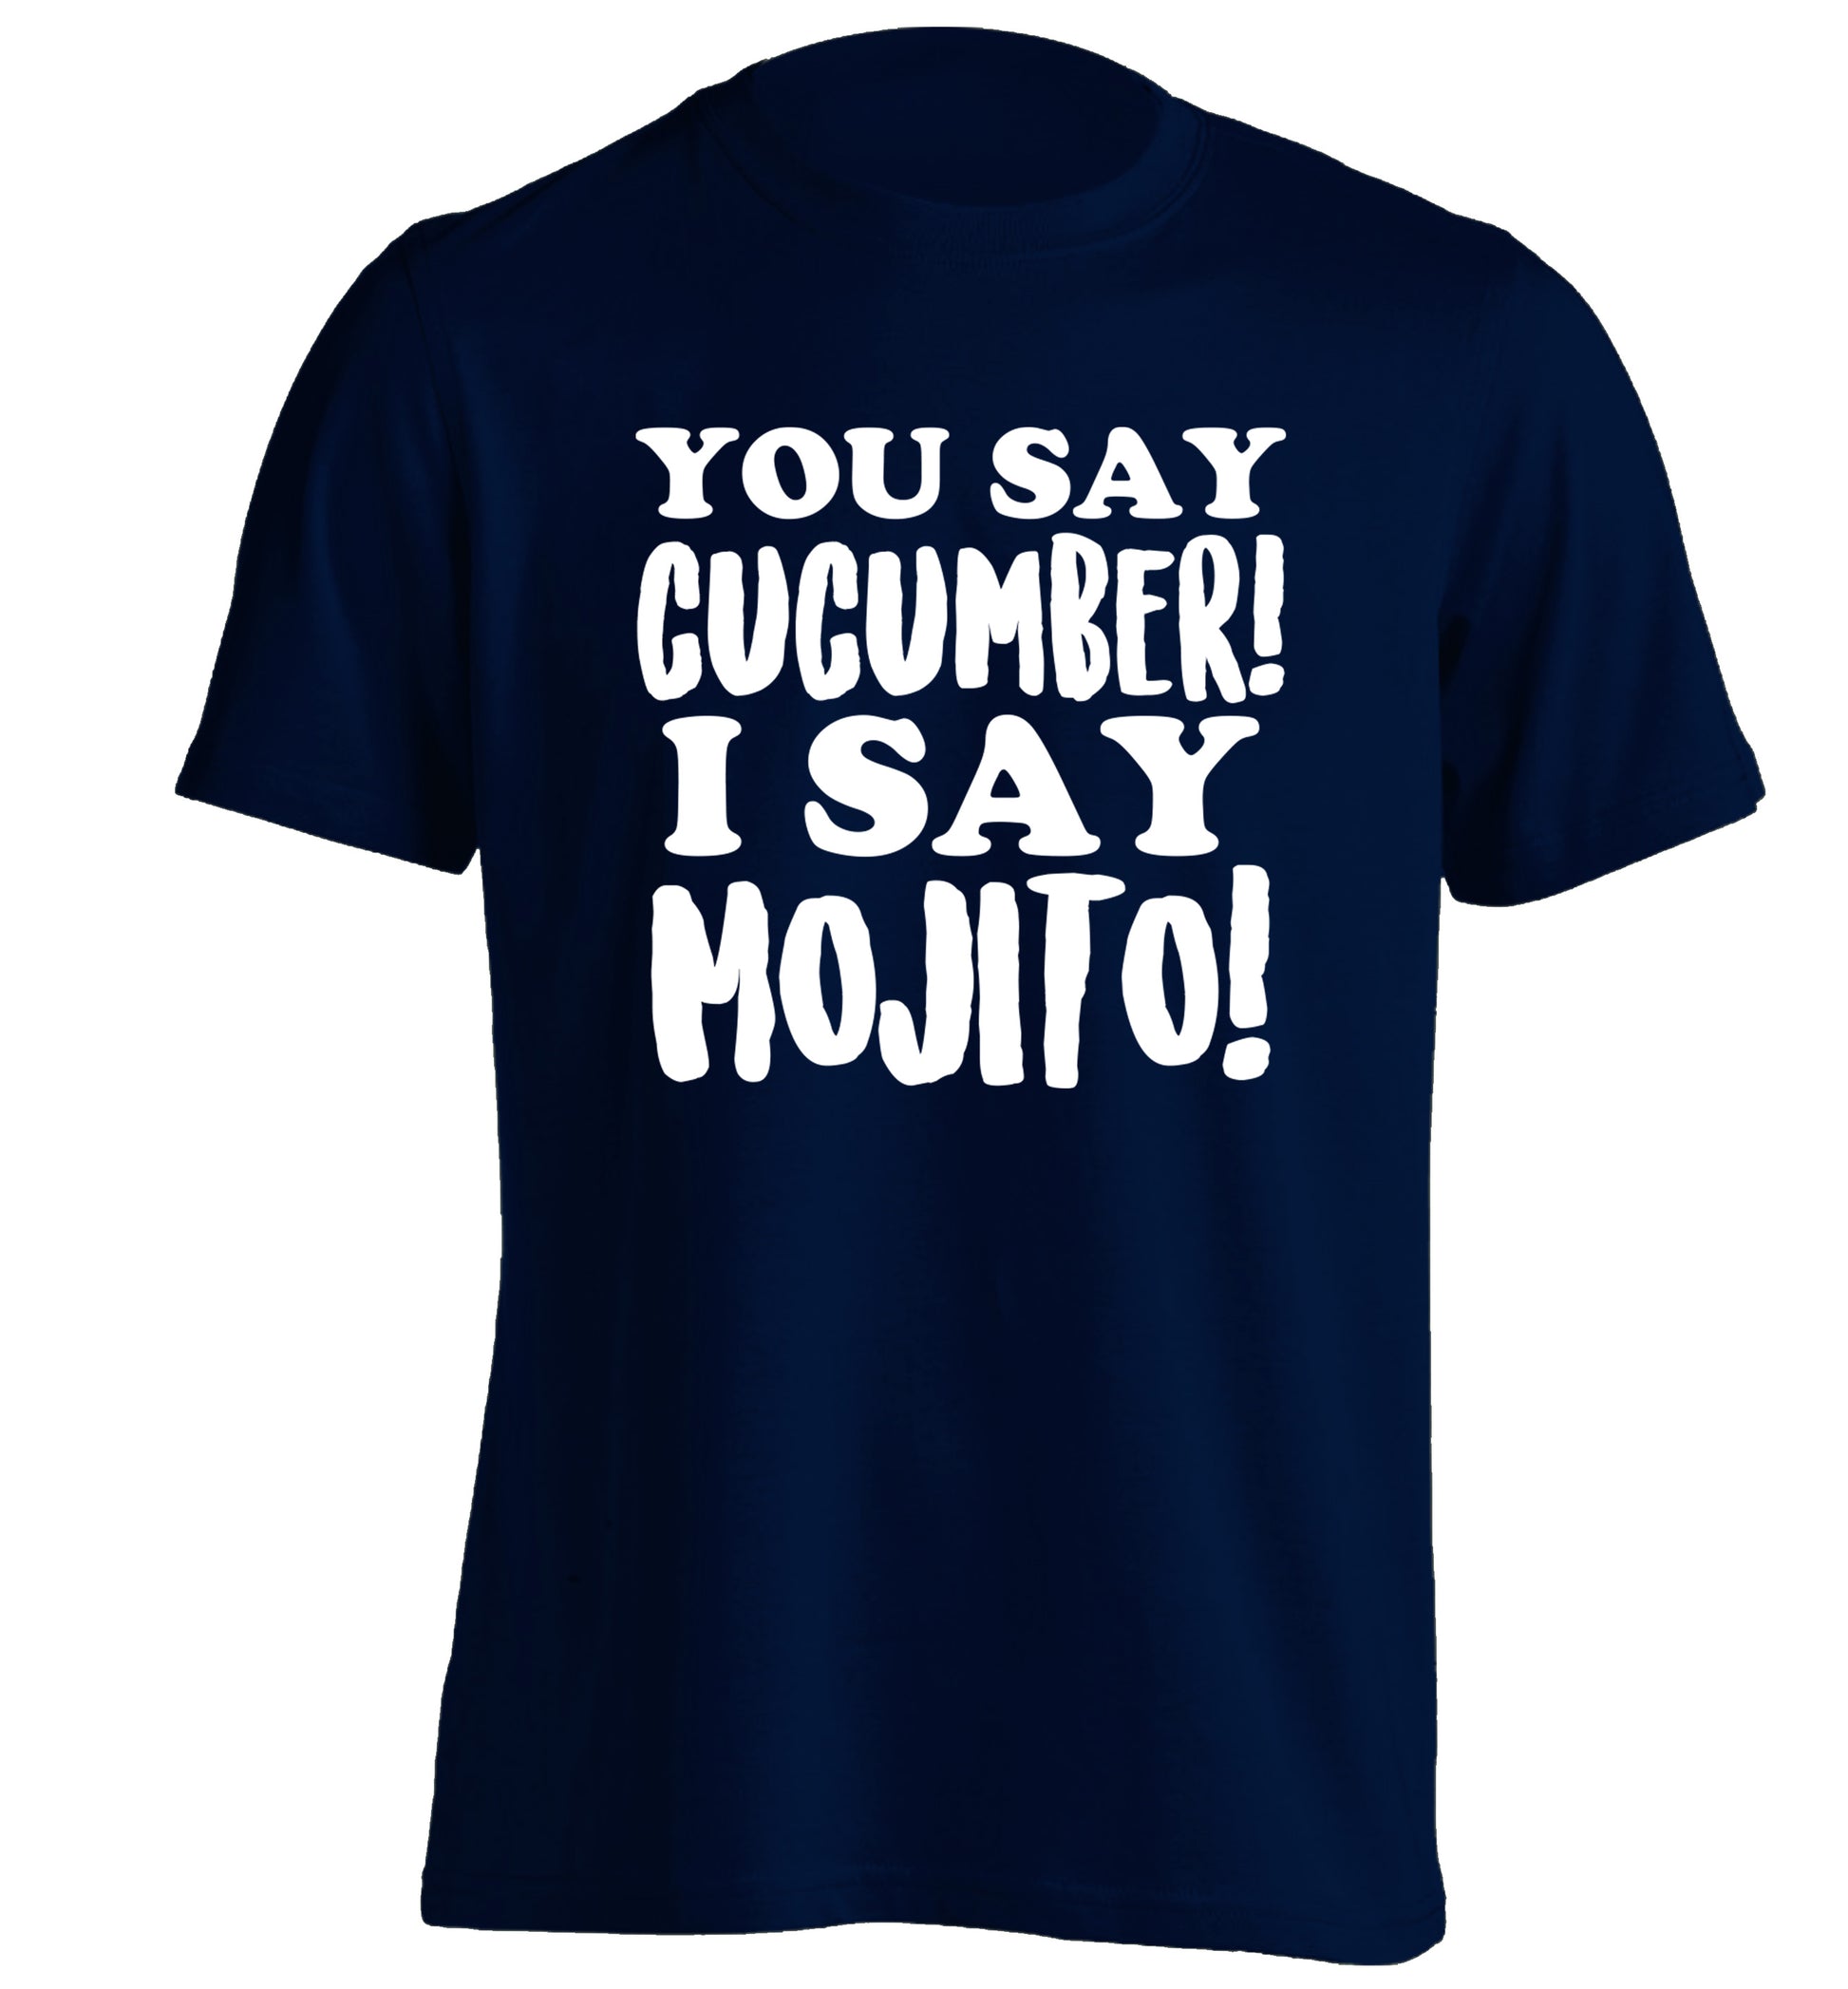 You say cucumber I say mojito! adults unisex navy Tshirt 2XL